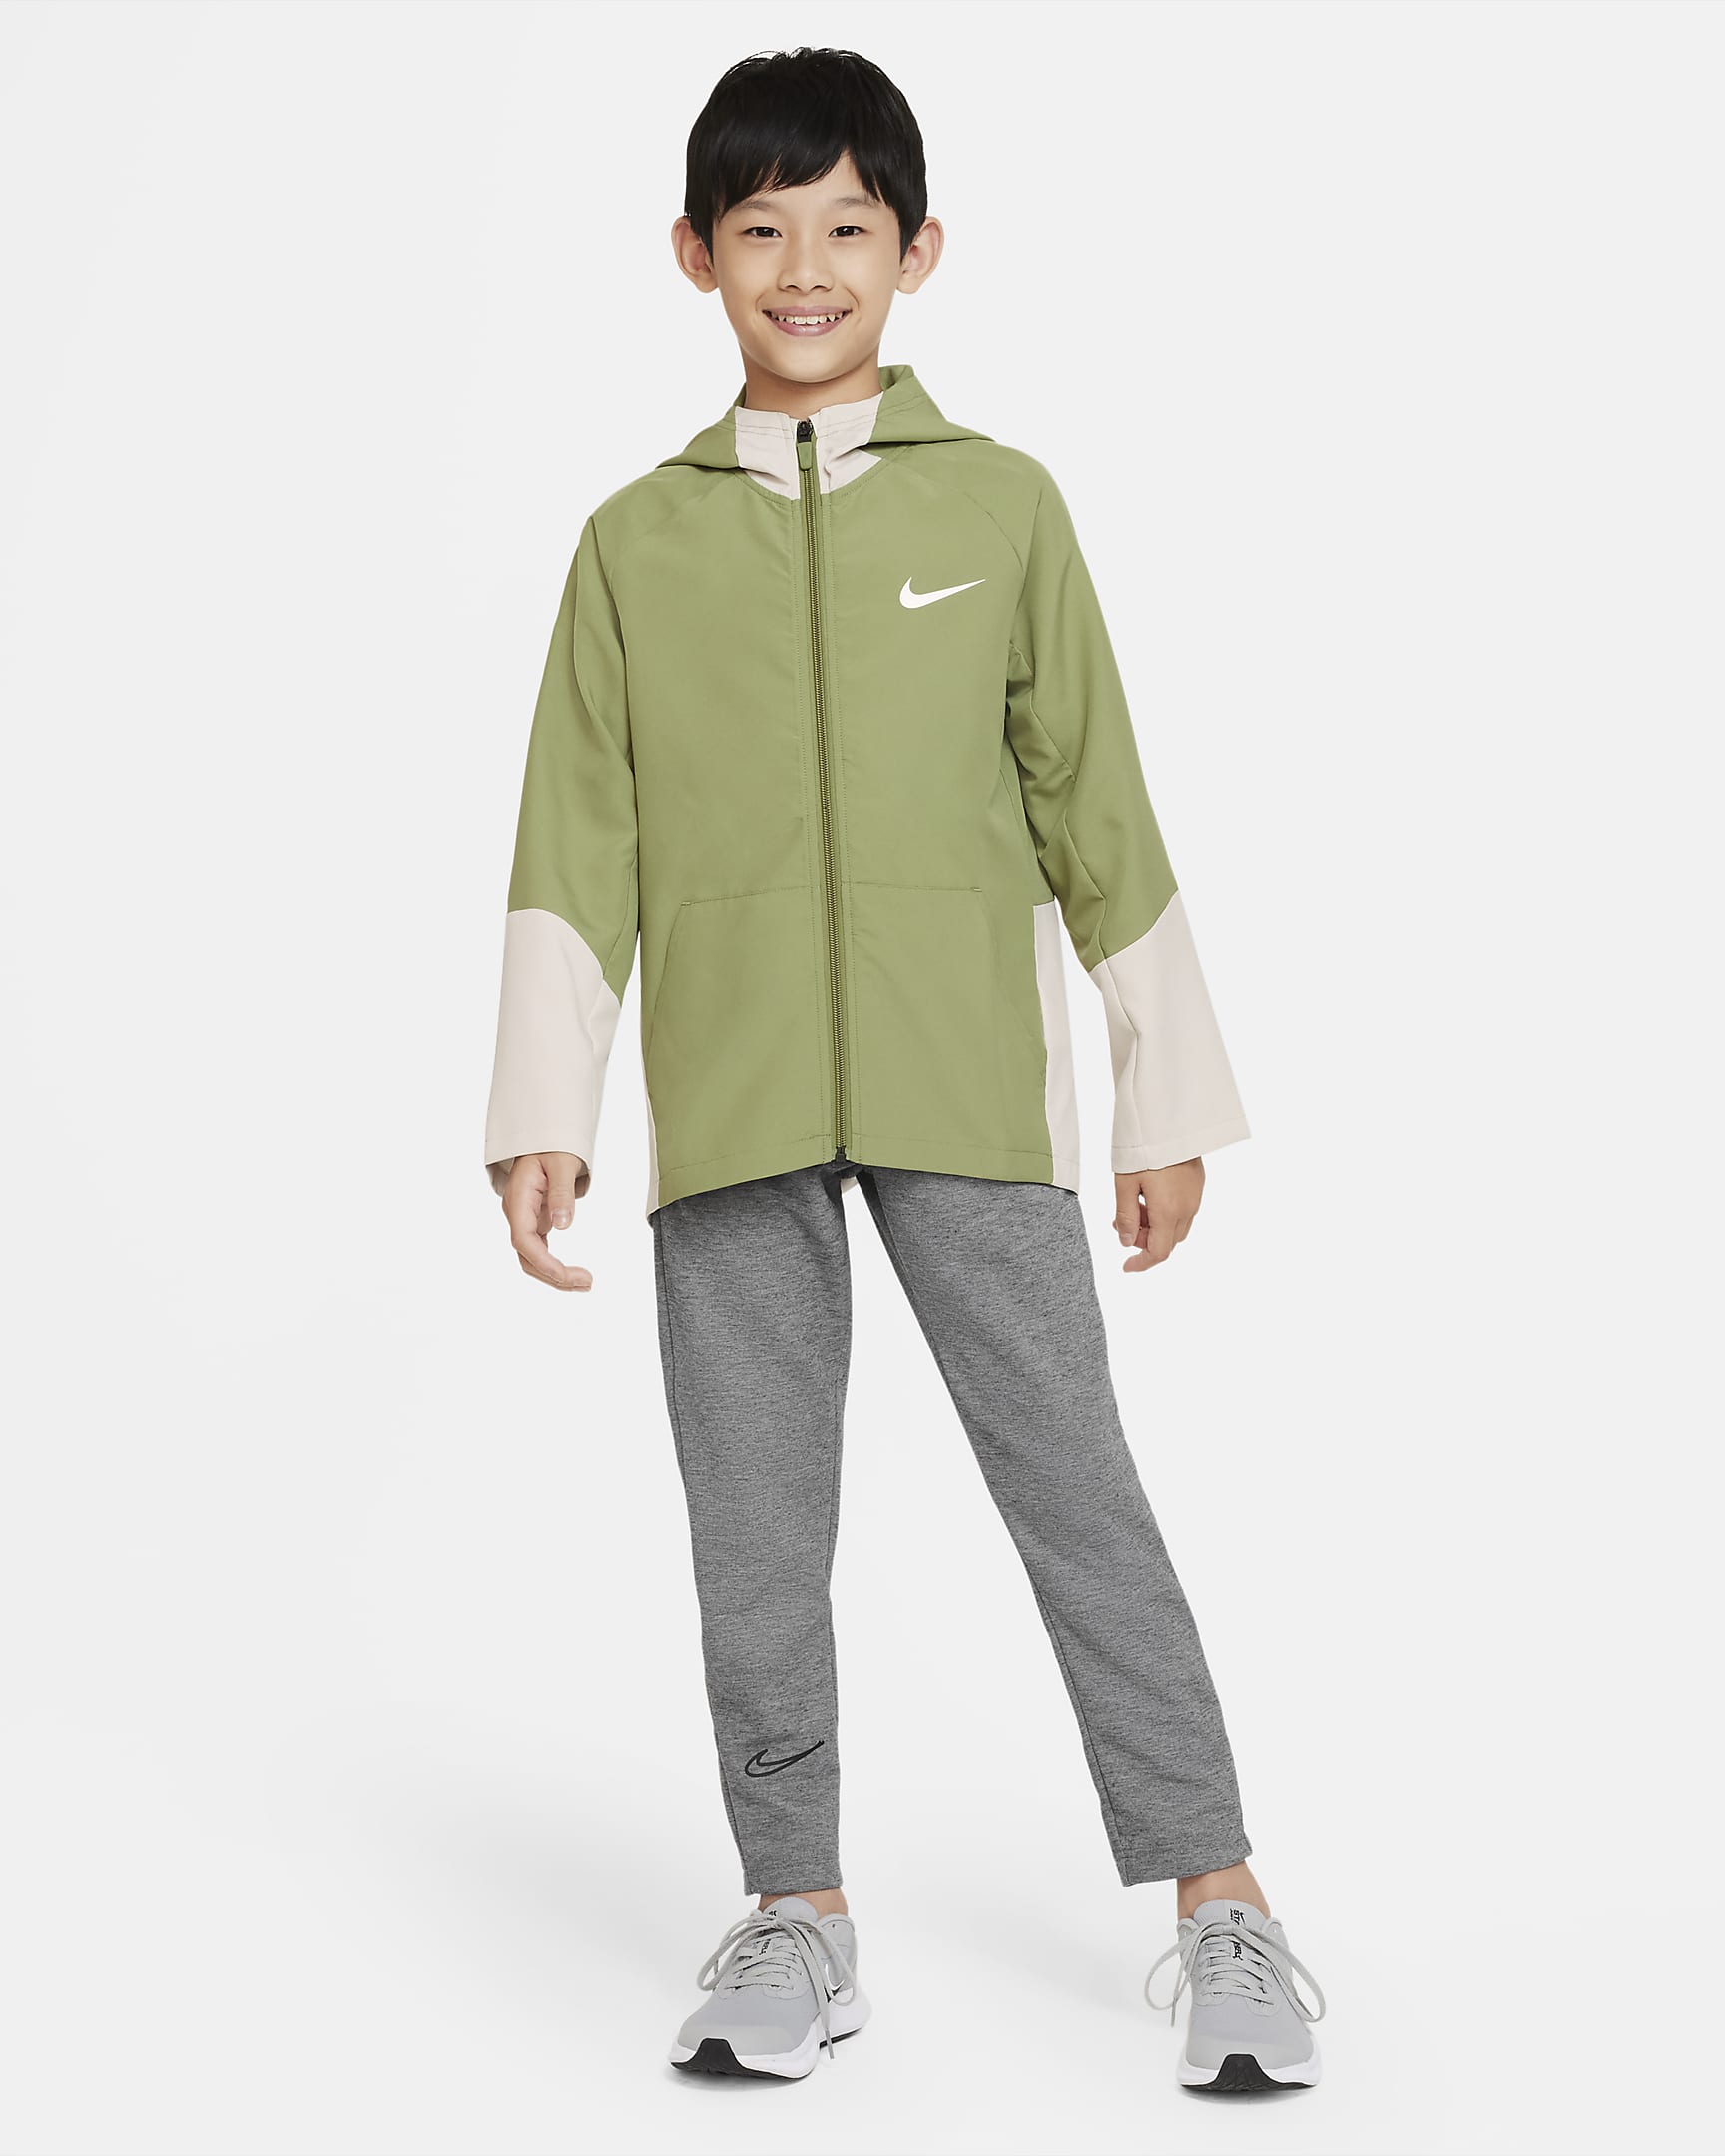 Nike Dri-FIT Big Kids' (Boys') Woven Training Jacket - Alligator/Light Bone/White